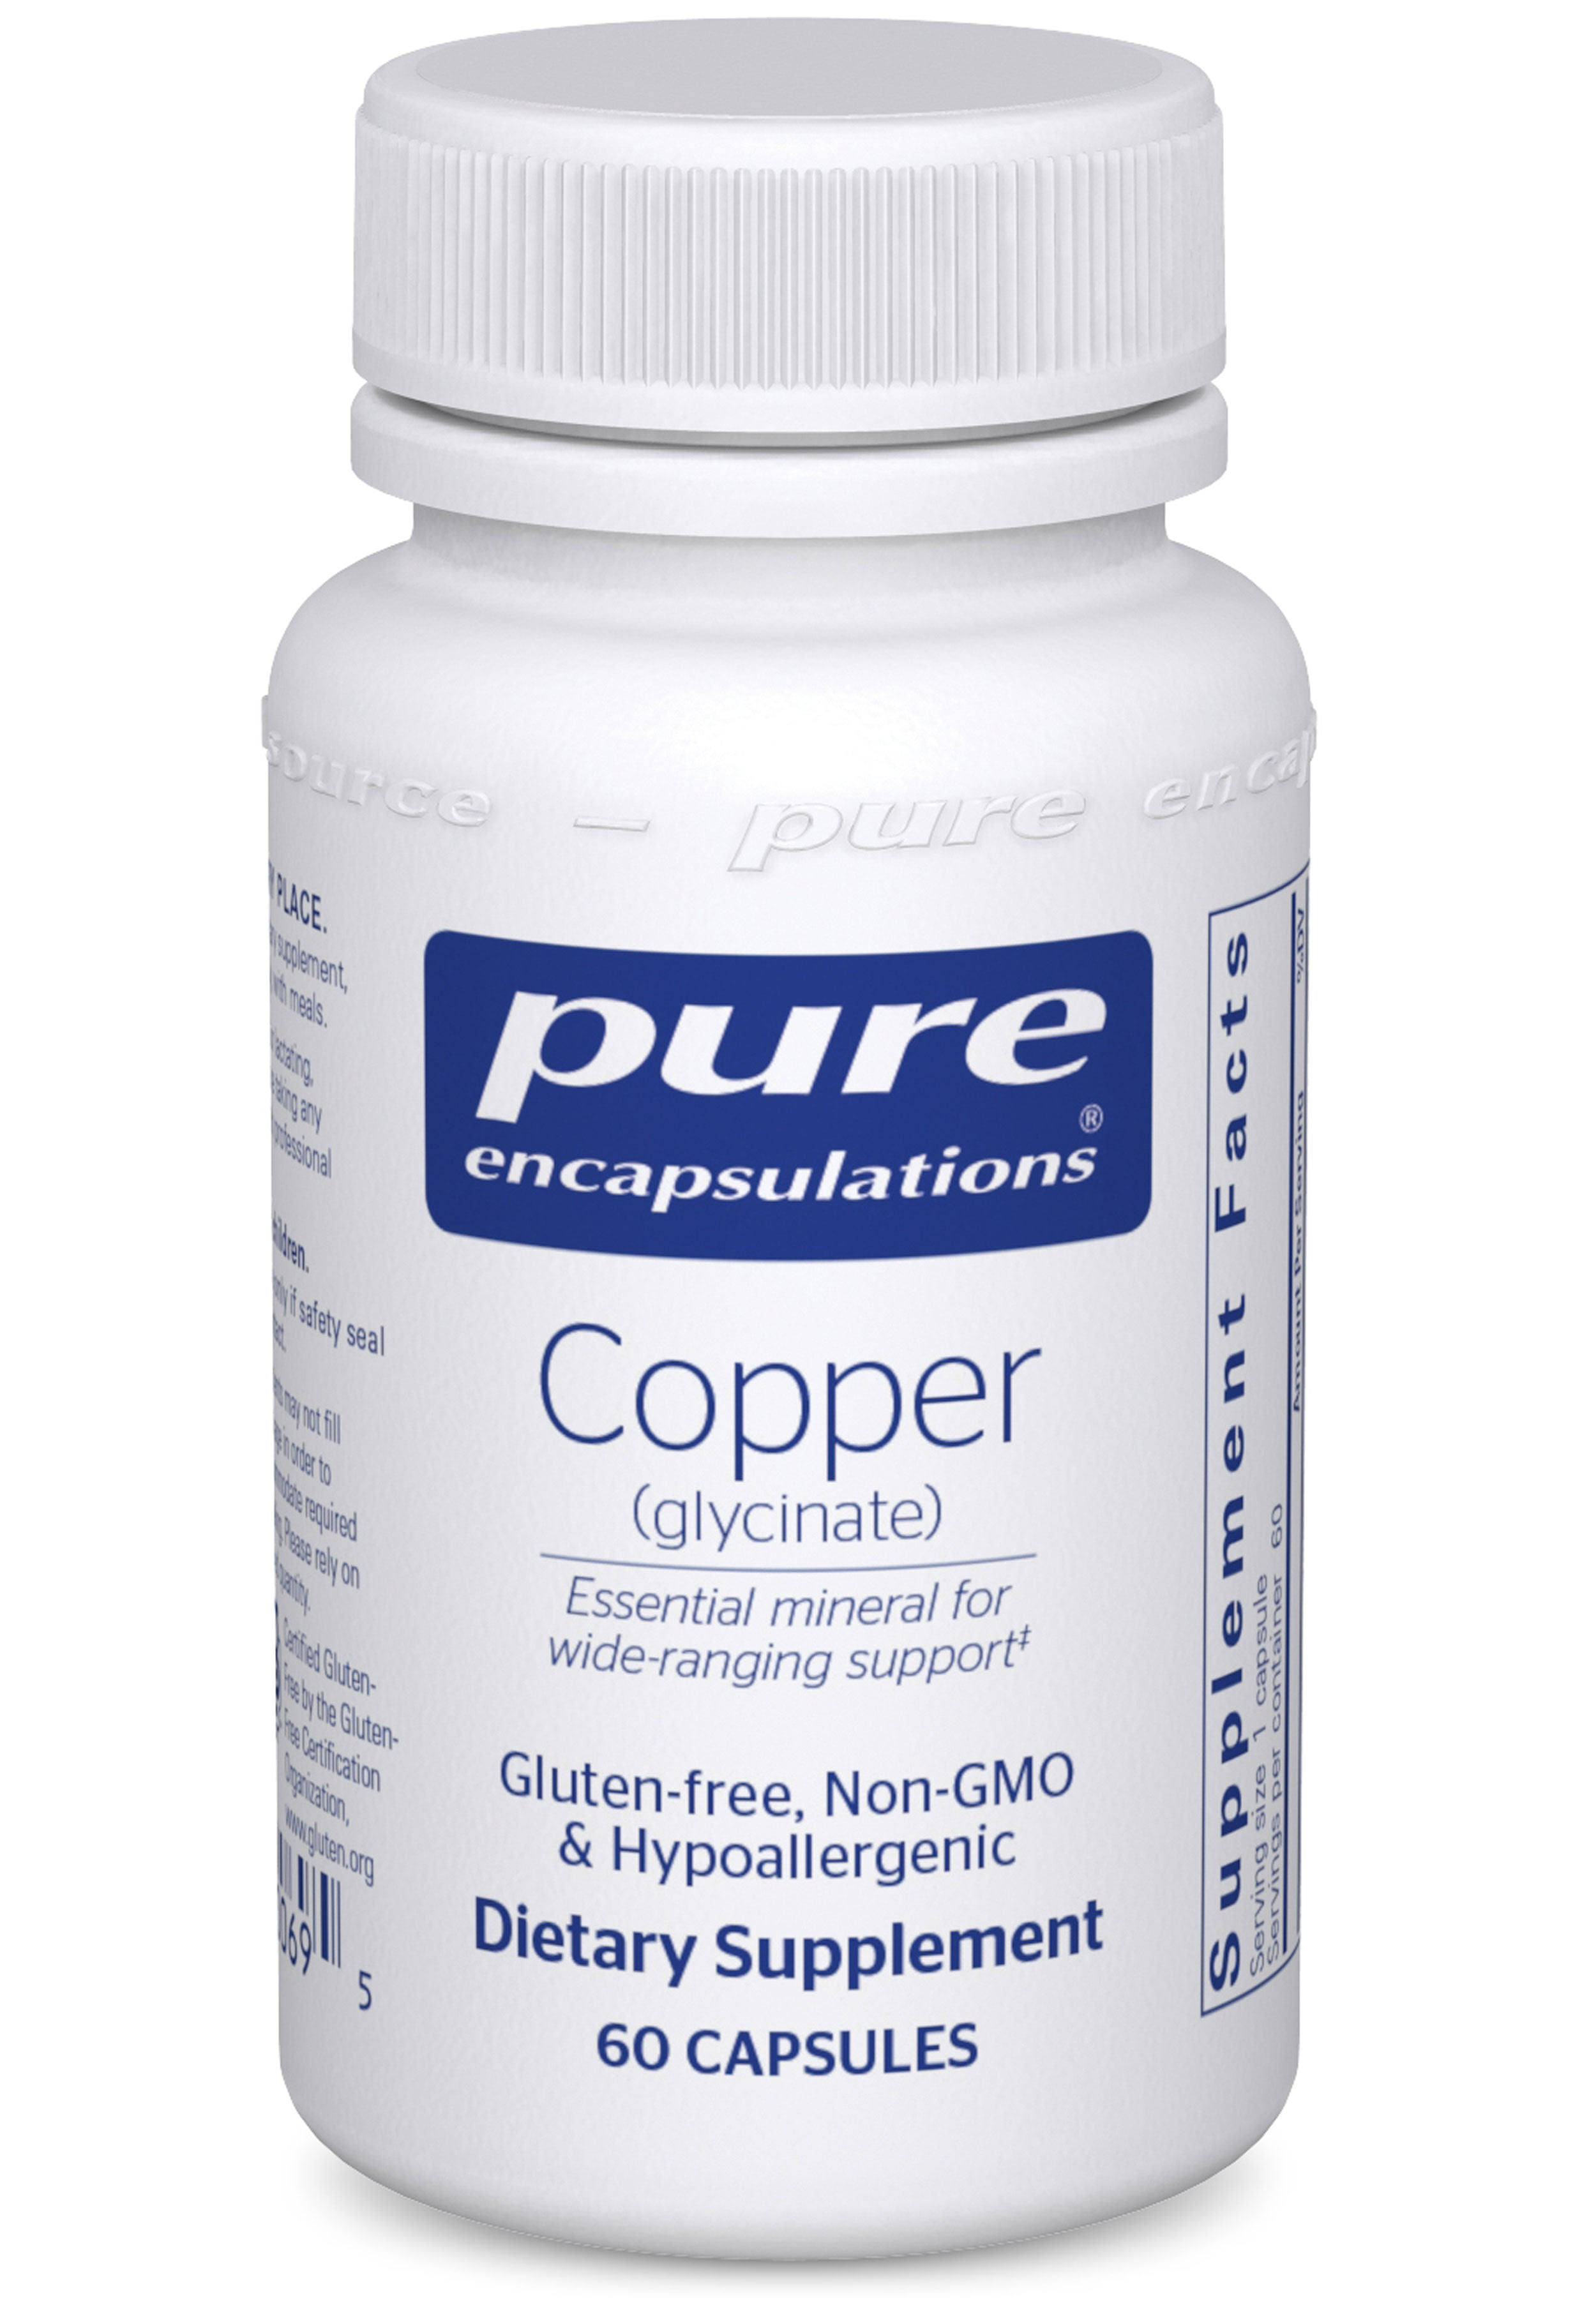 Pure Encapsulations Copper (Glycinate) Hypoallergenic Essential Mineral Supplement - 60 Capsules